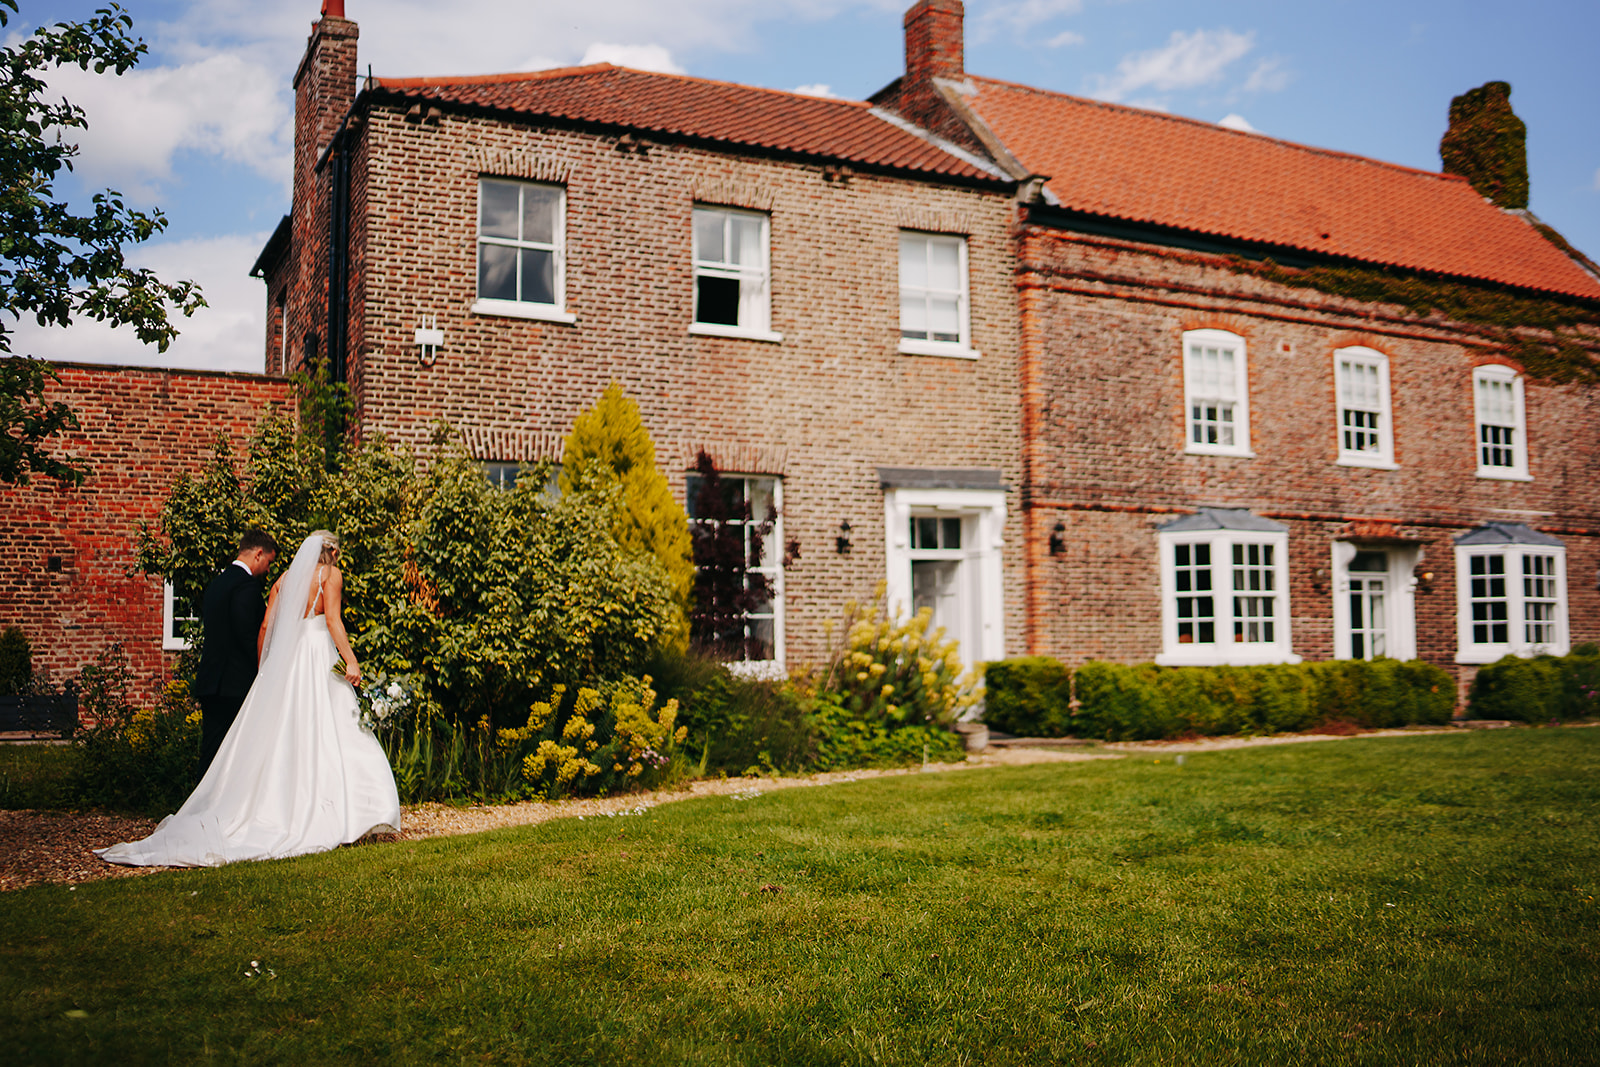 hornington manor bride and groom